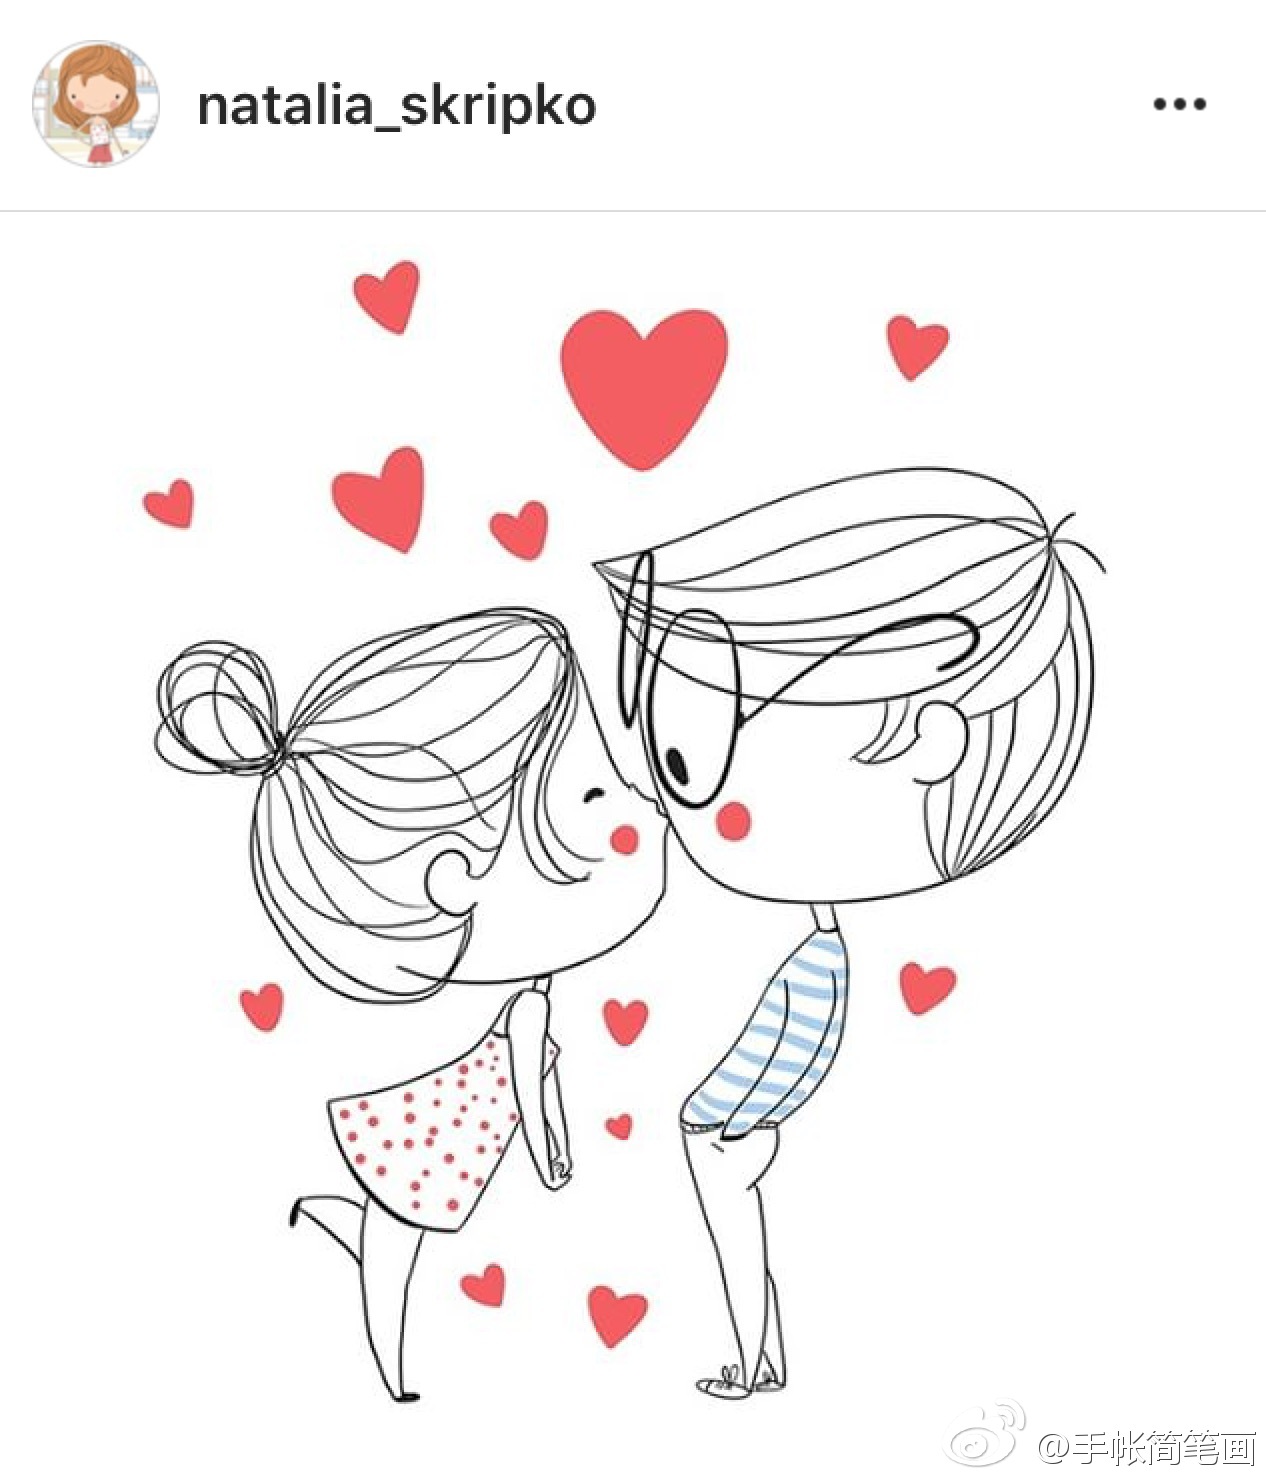 natalia_skripko笔下的可爱女孩和甜蜜小情侣,画在手帐上棒棒滴